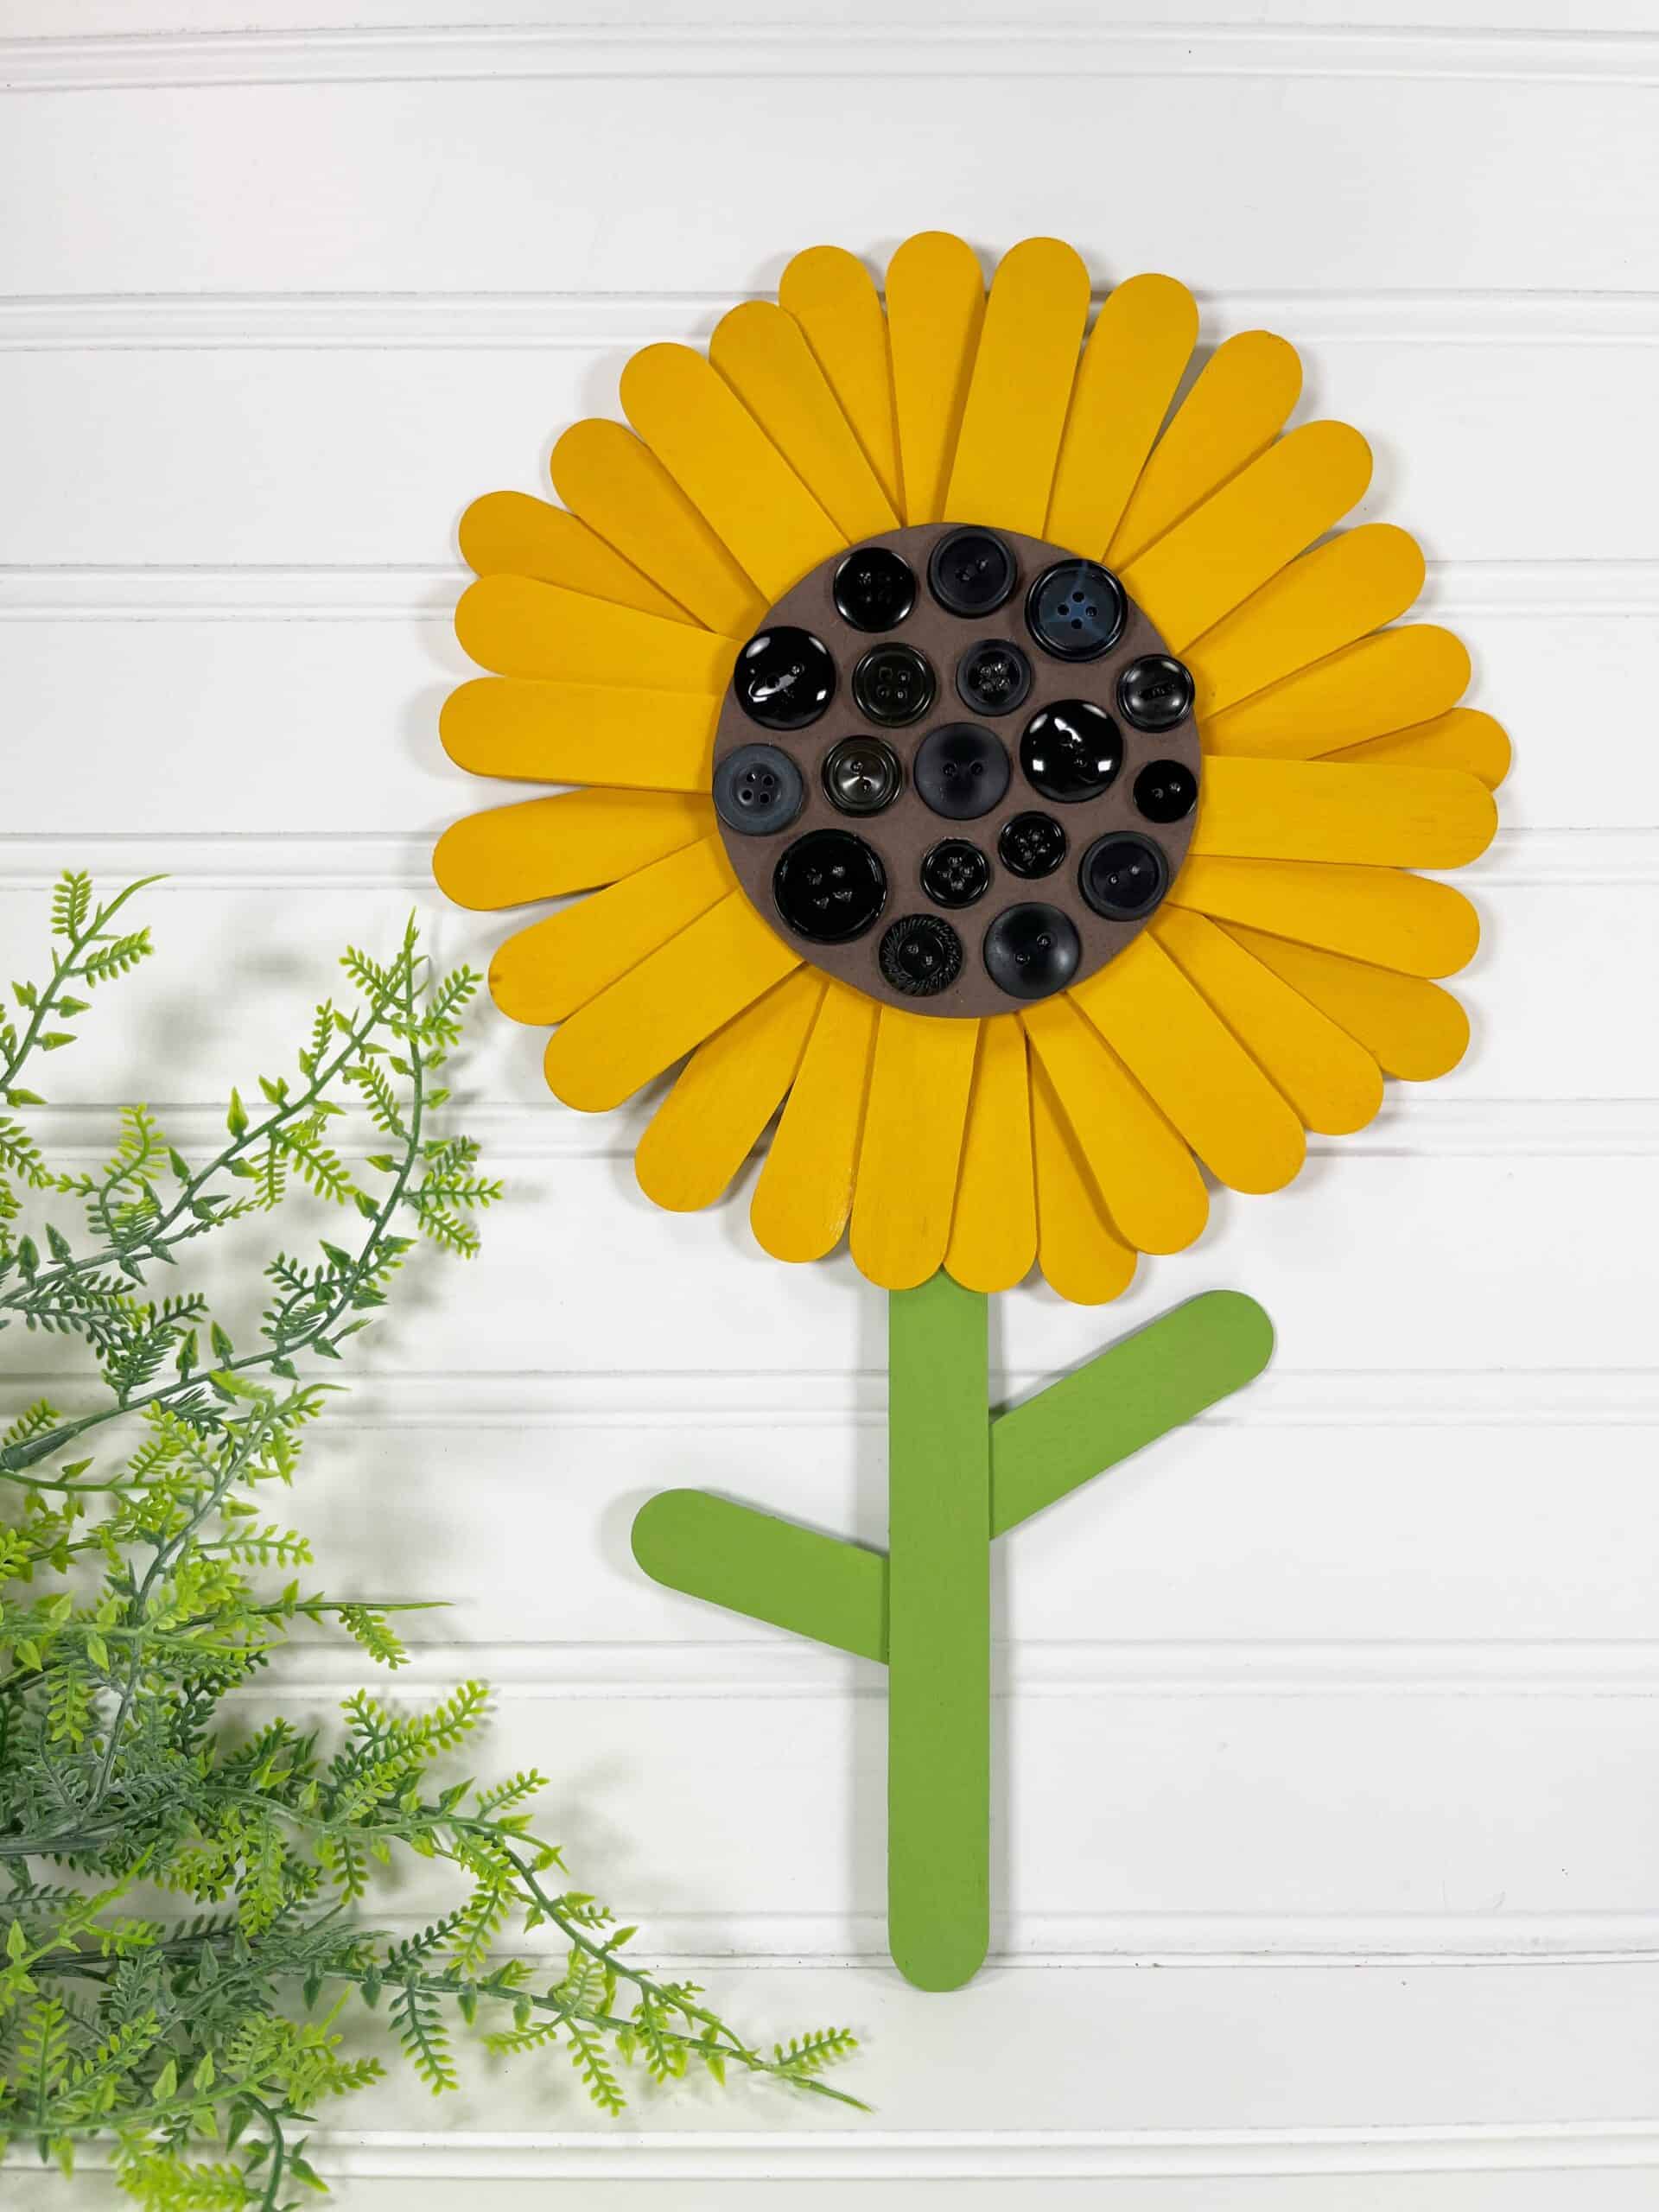 Cutest Ever Sunflower Craft